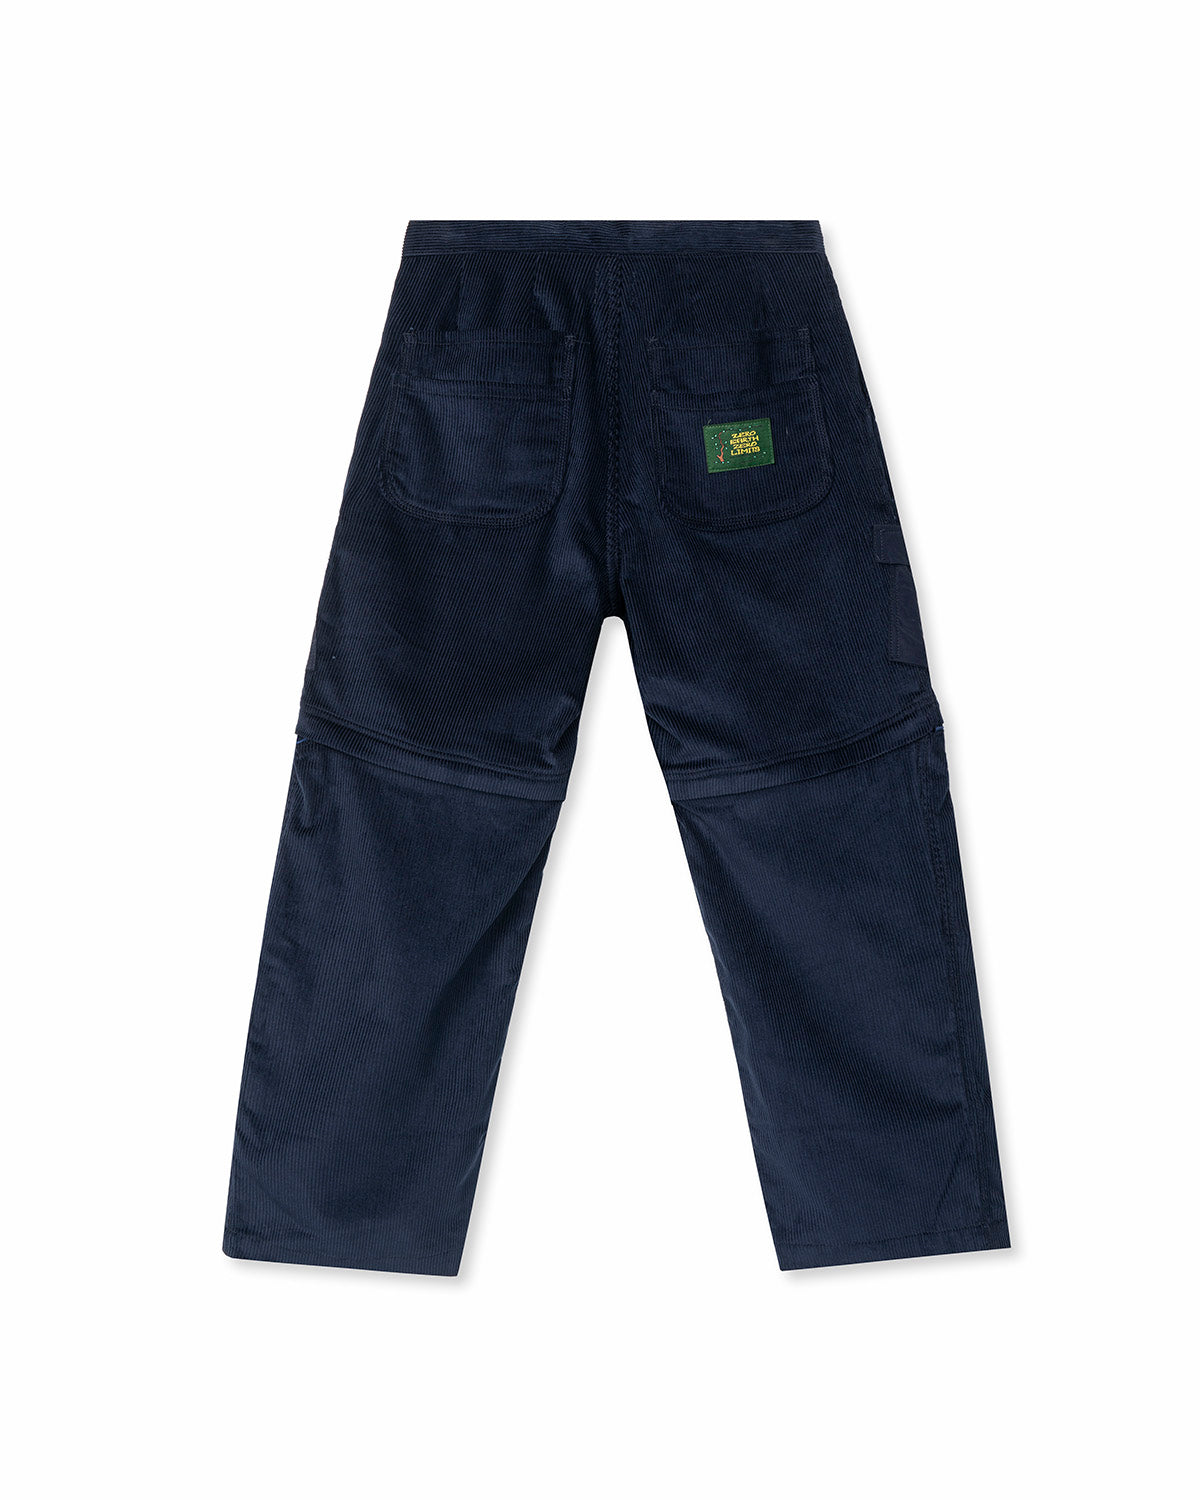 Buy Regatta Men's Leesville II Zip Off Walking Trousers from £12.83 (Today)  – Best Deals on idealo.co.uk